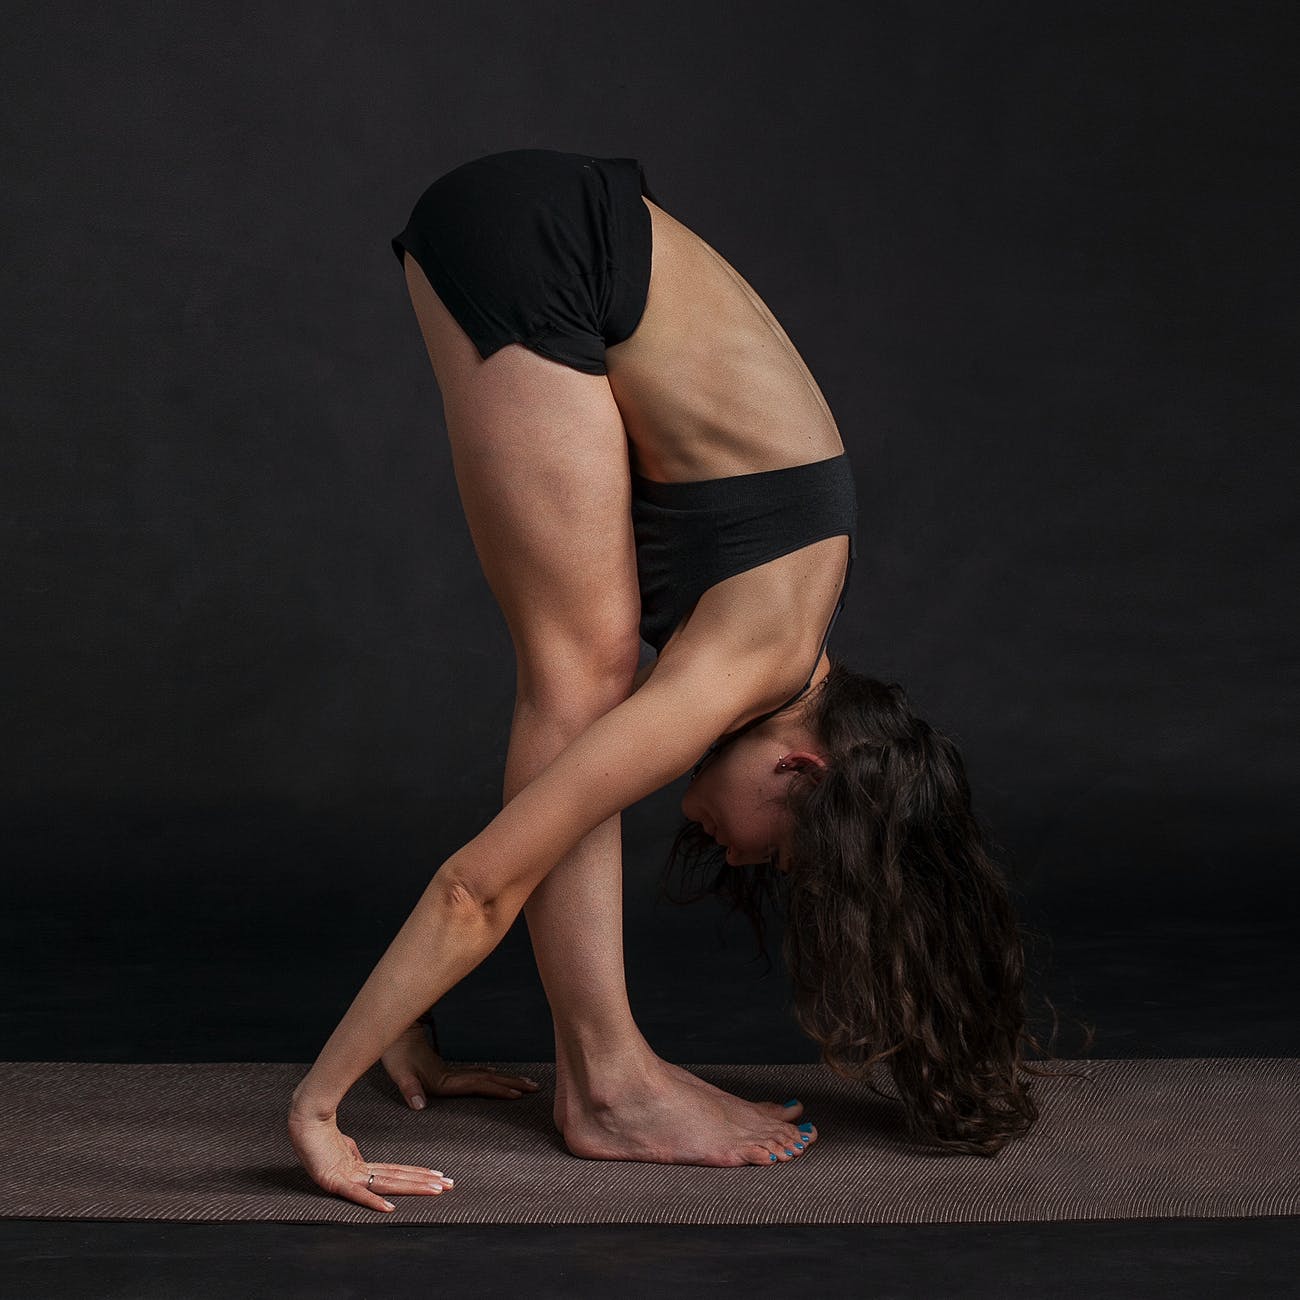 woman wearing black sports bra reaching floor while standing